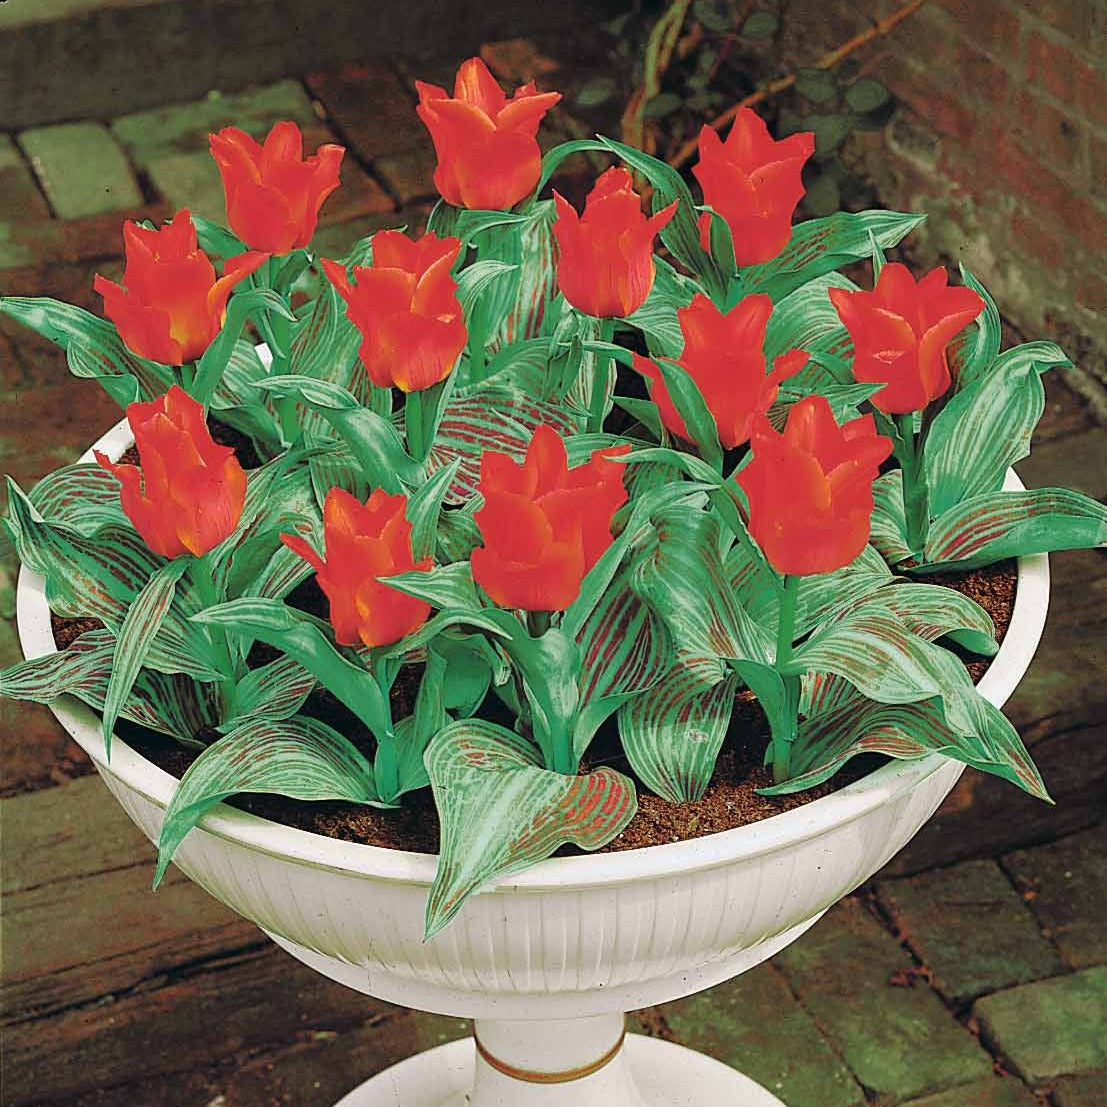 10 Tulipes Chaperon Rouge - Tulipa greigii chaperon rouge - Tulipe